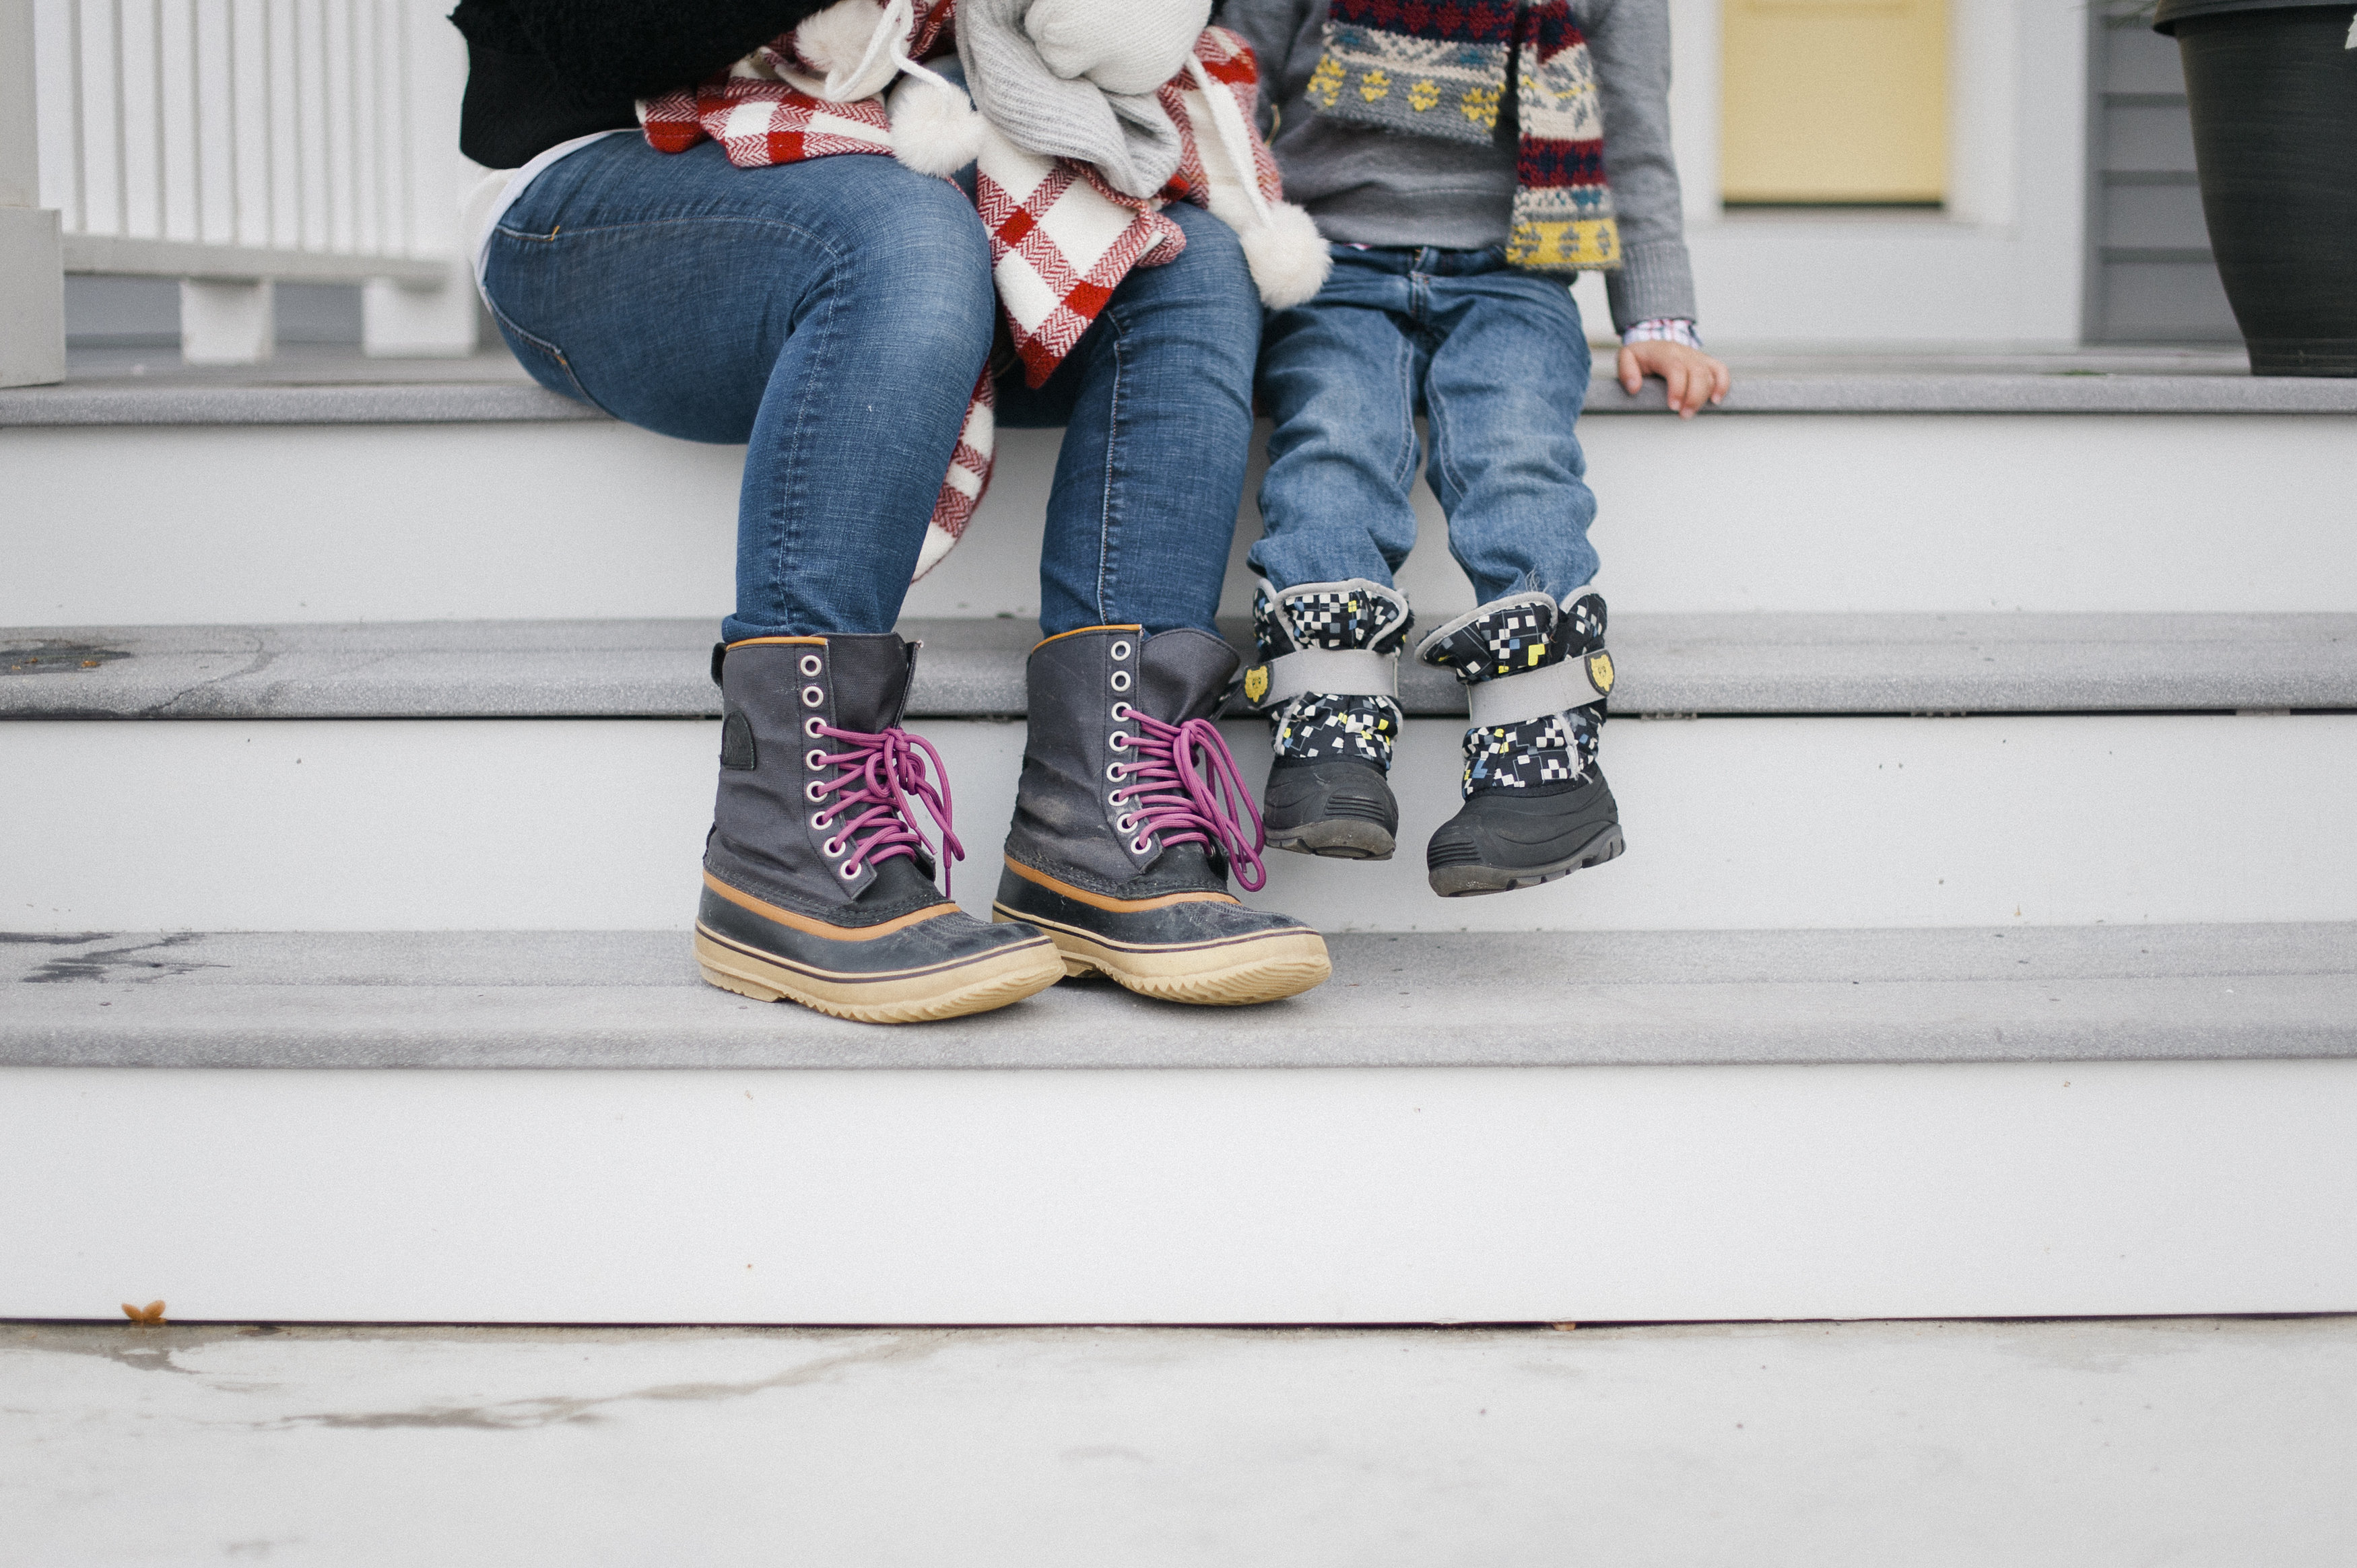 How to avoid losing kids winter gear